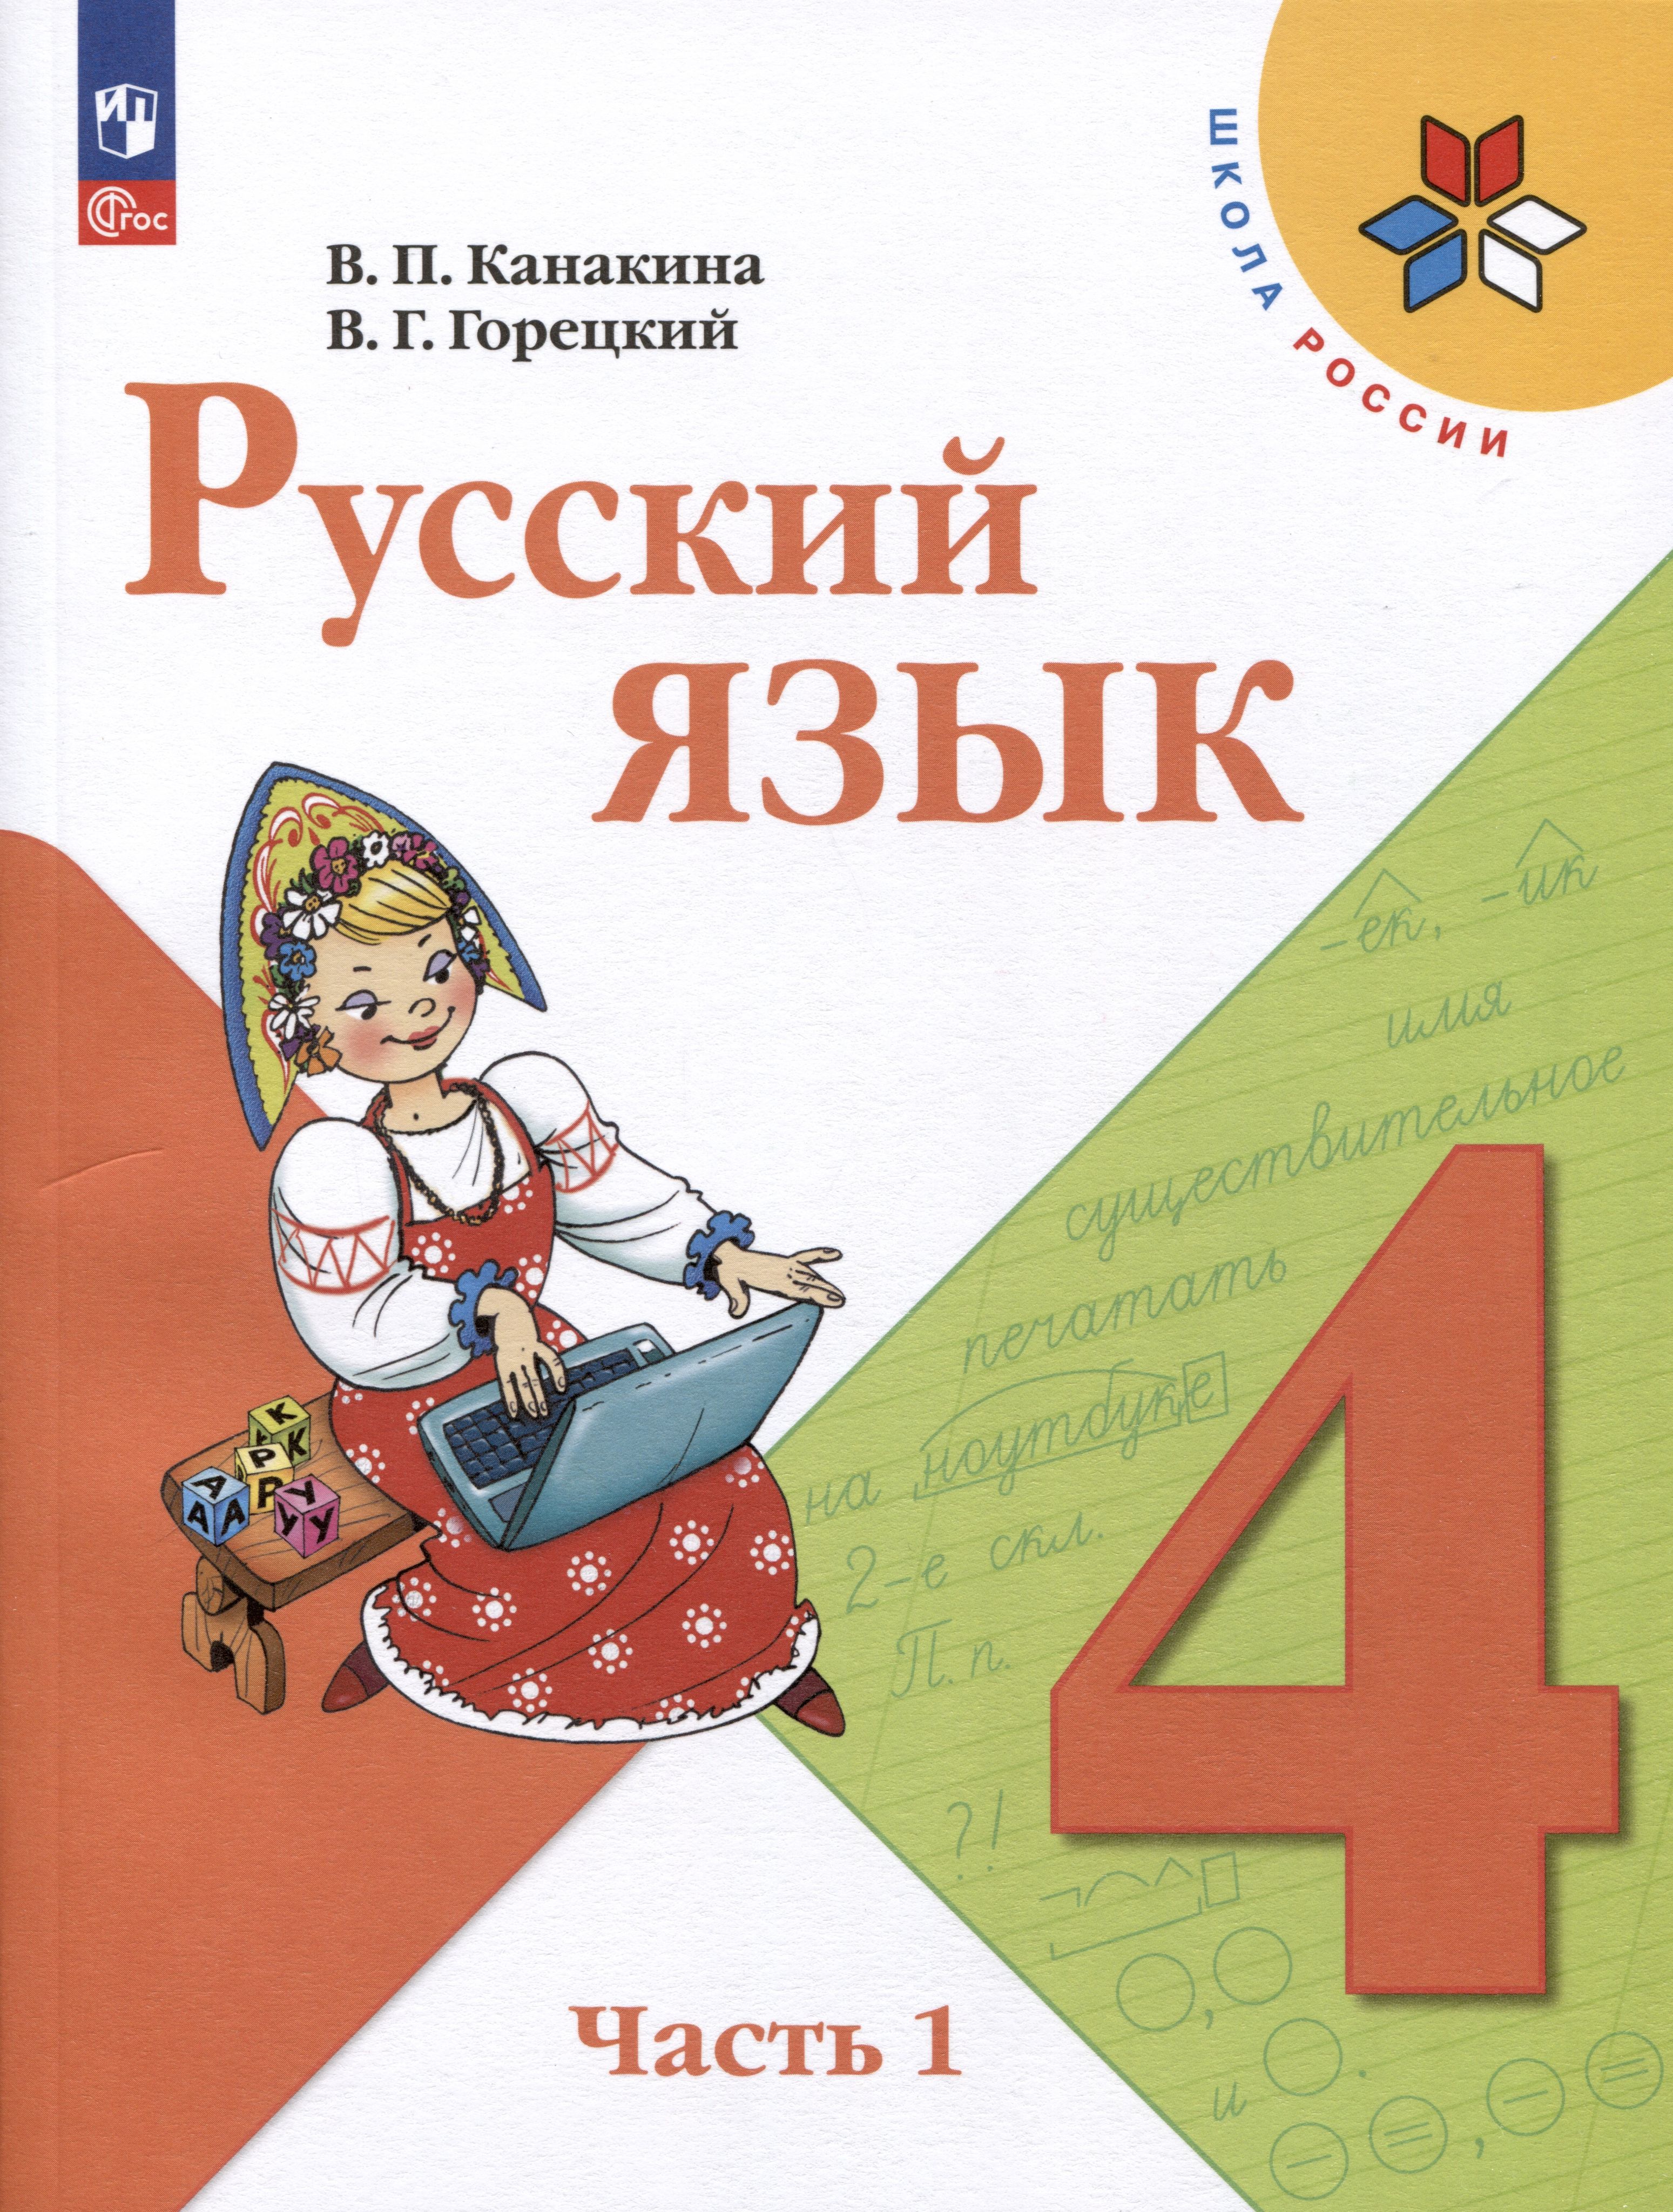 А четыре на русском